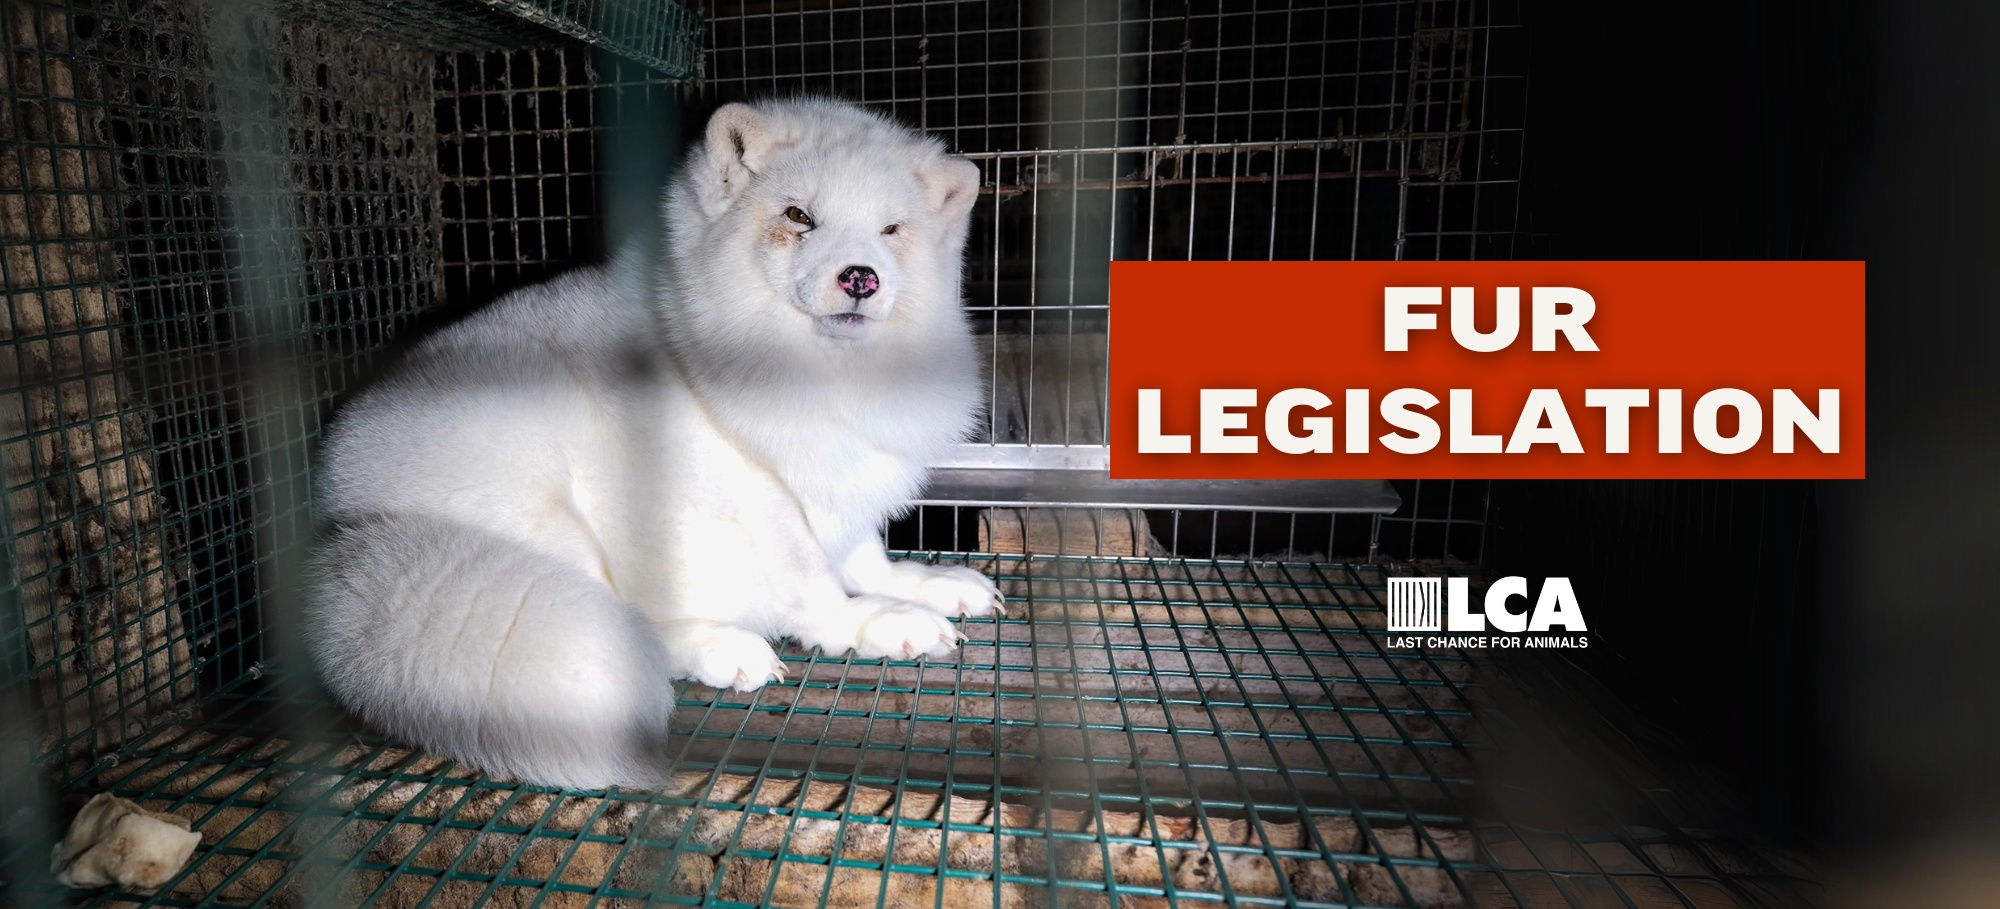 Fur legislation worldwide